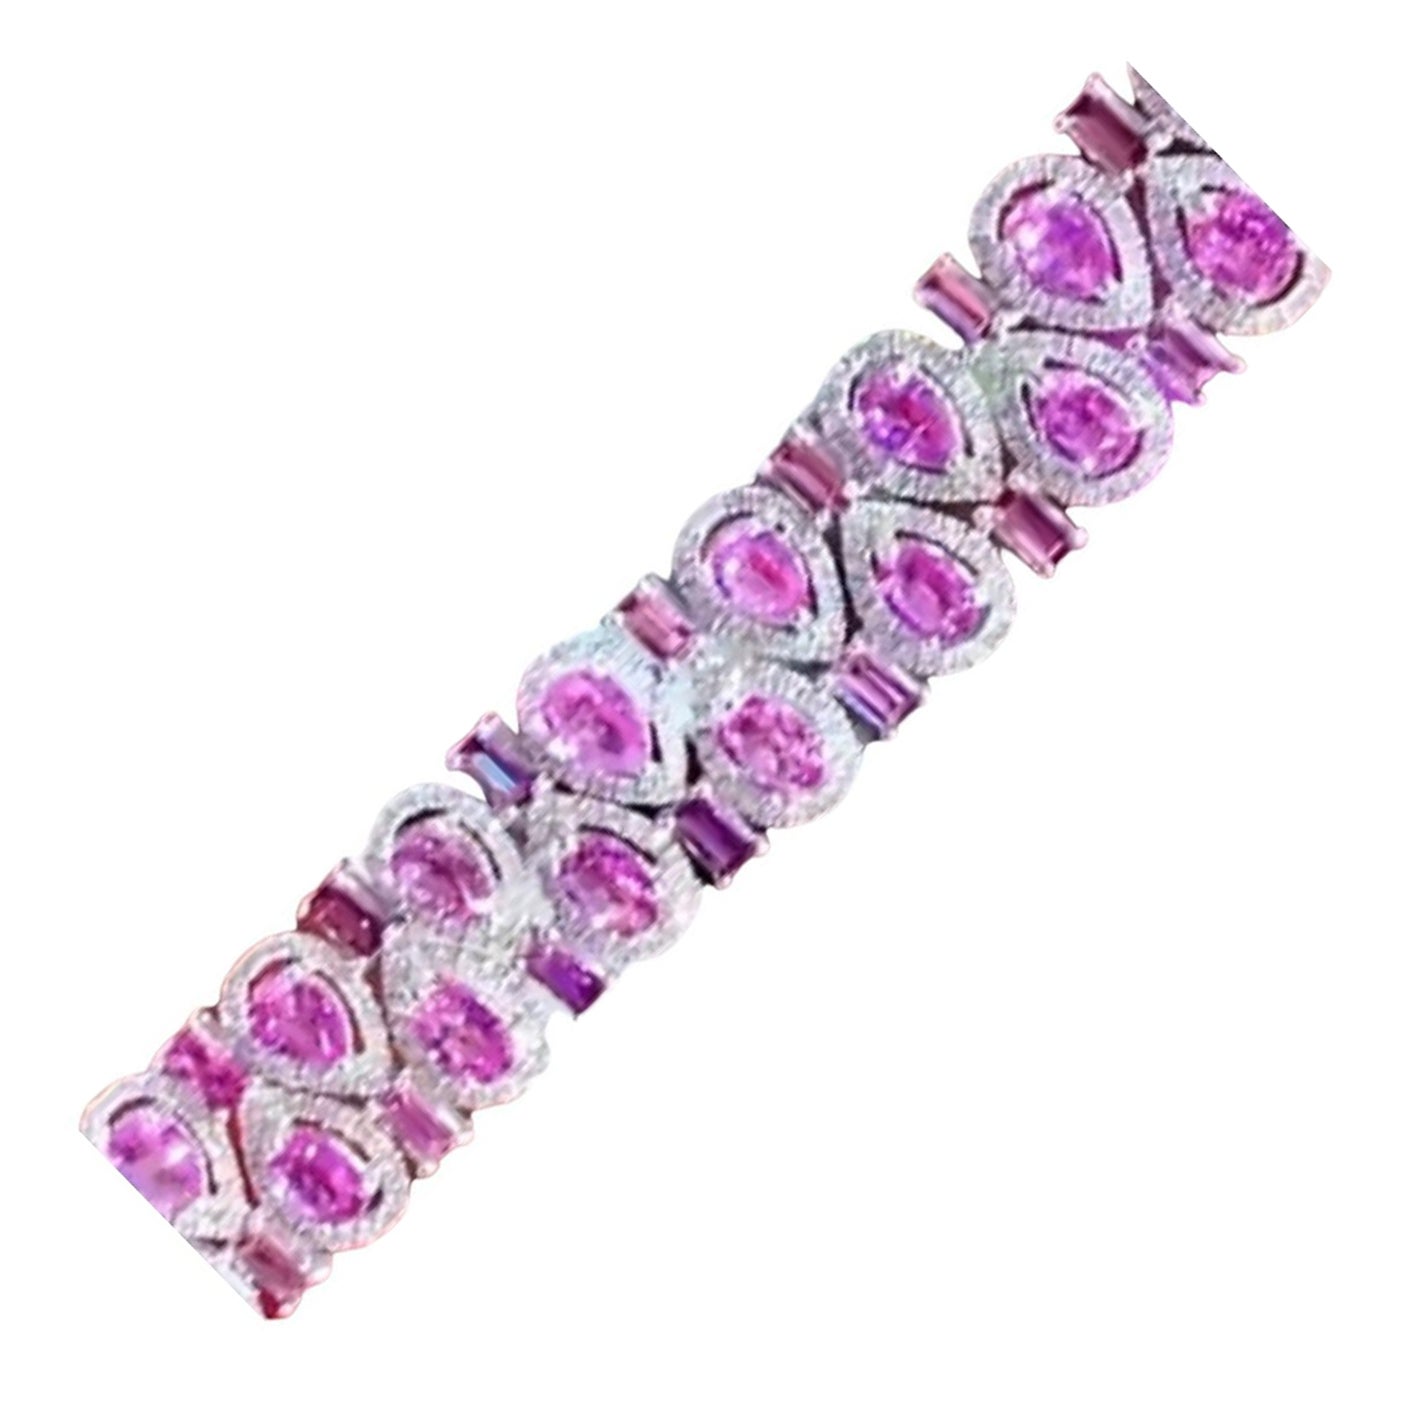 Gorgeous 34.13 Carats of Ceylon Pink Sapphires and Diamonds on Bracelet